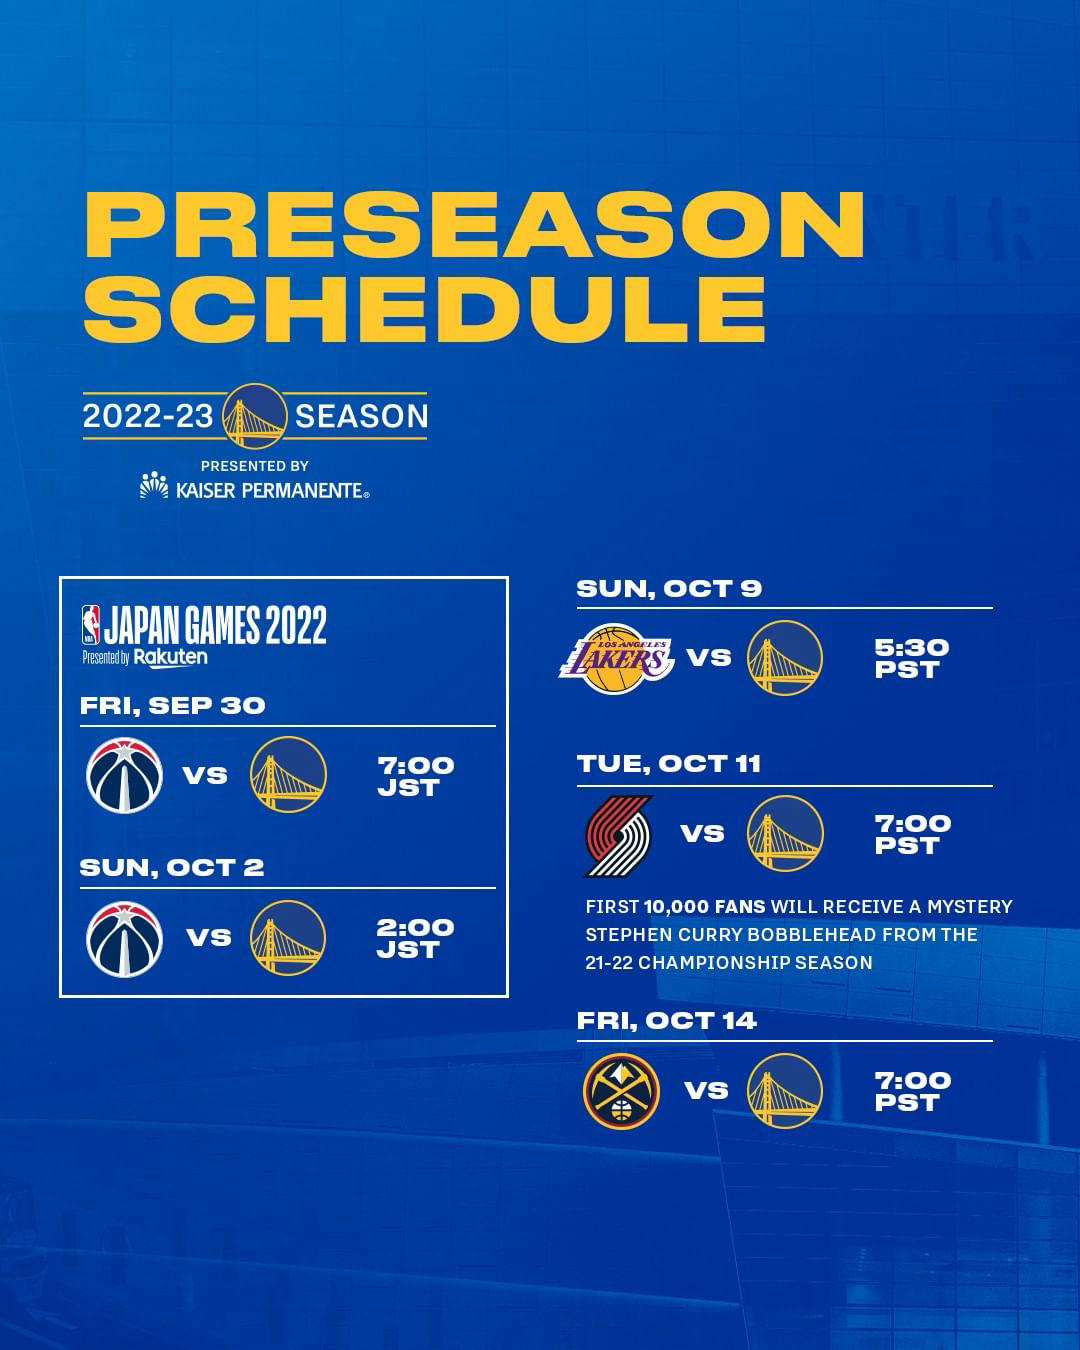 Golden State Warriors - Mark your calendars